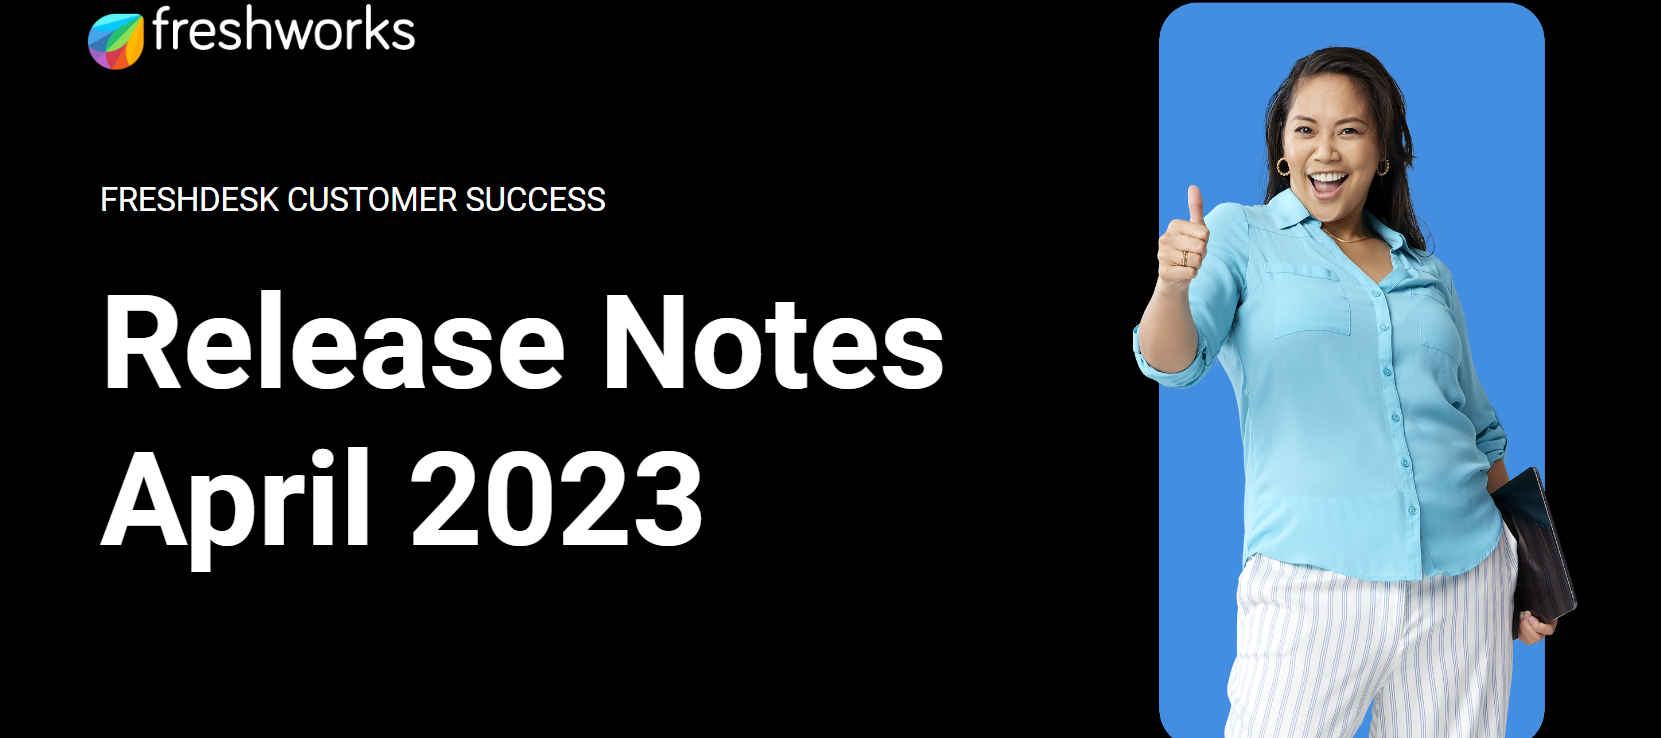 Freshdesk Customer Success Release Notes - April 2023